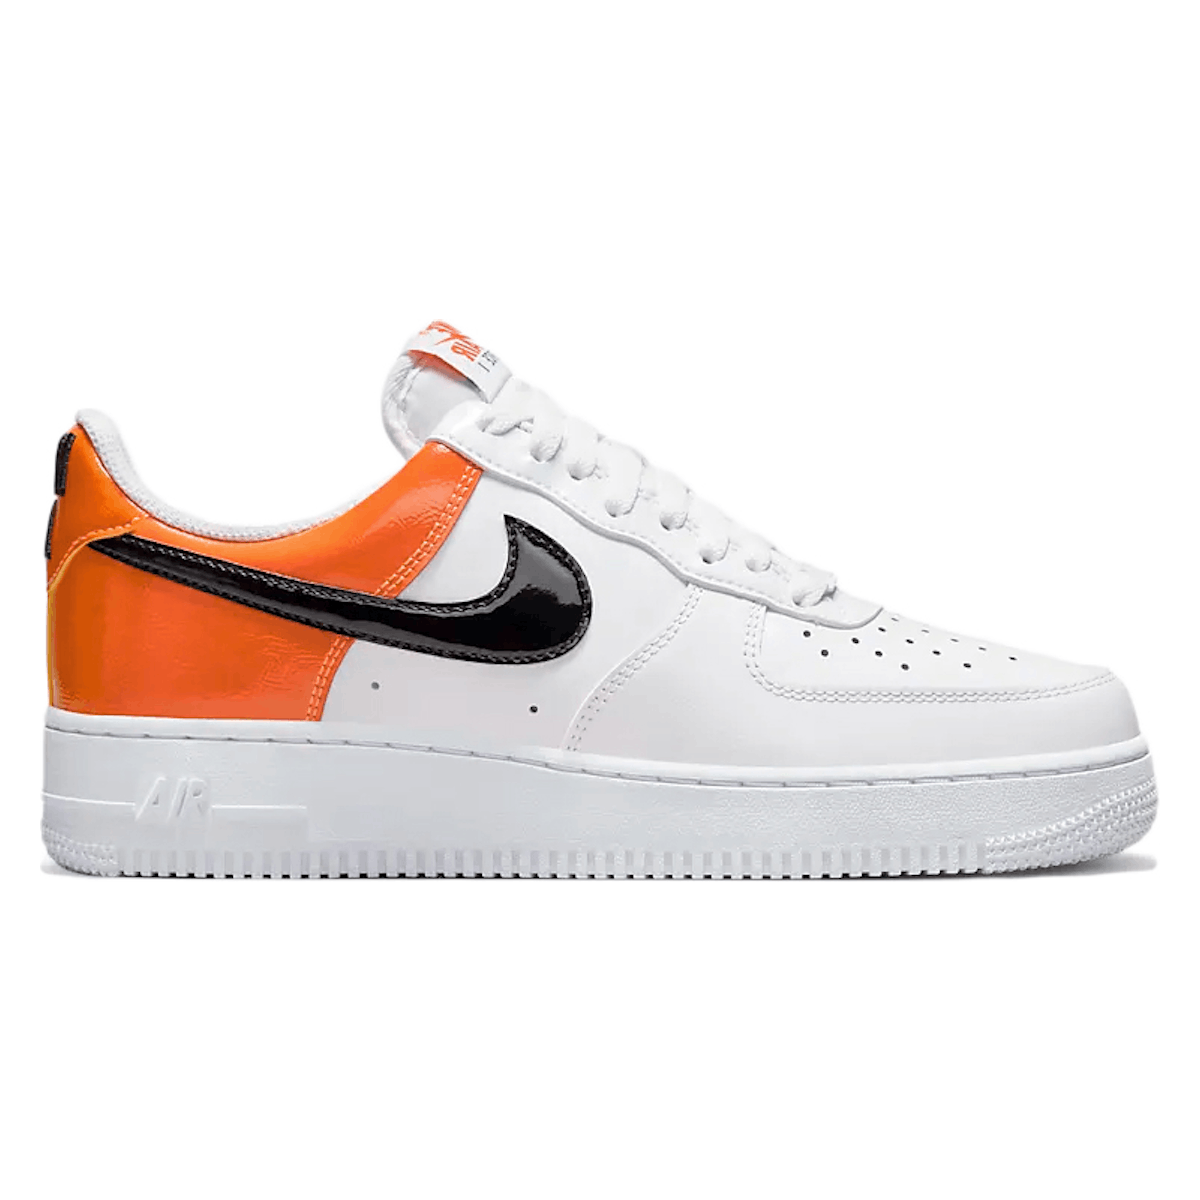 Nike Air Force 1 Low '07 Essential White/Brilliant Orange (W)